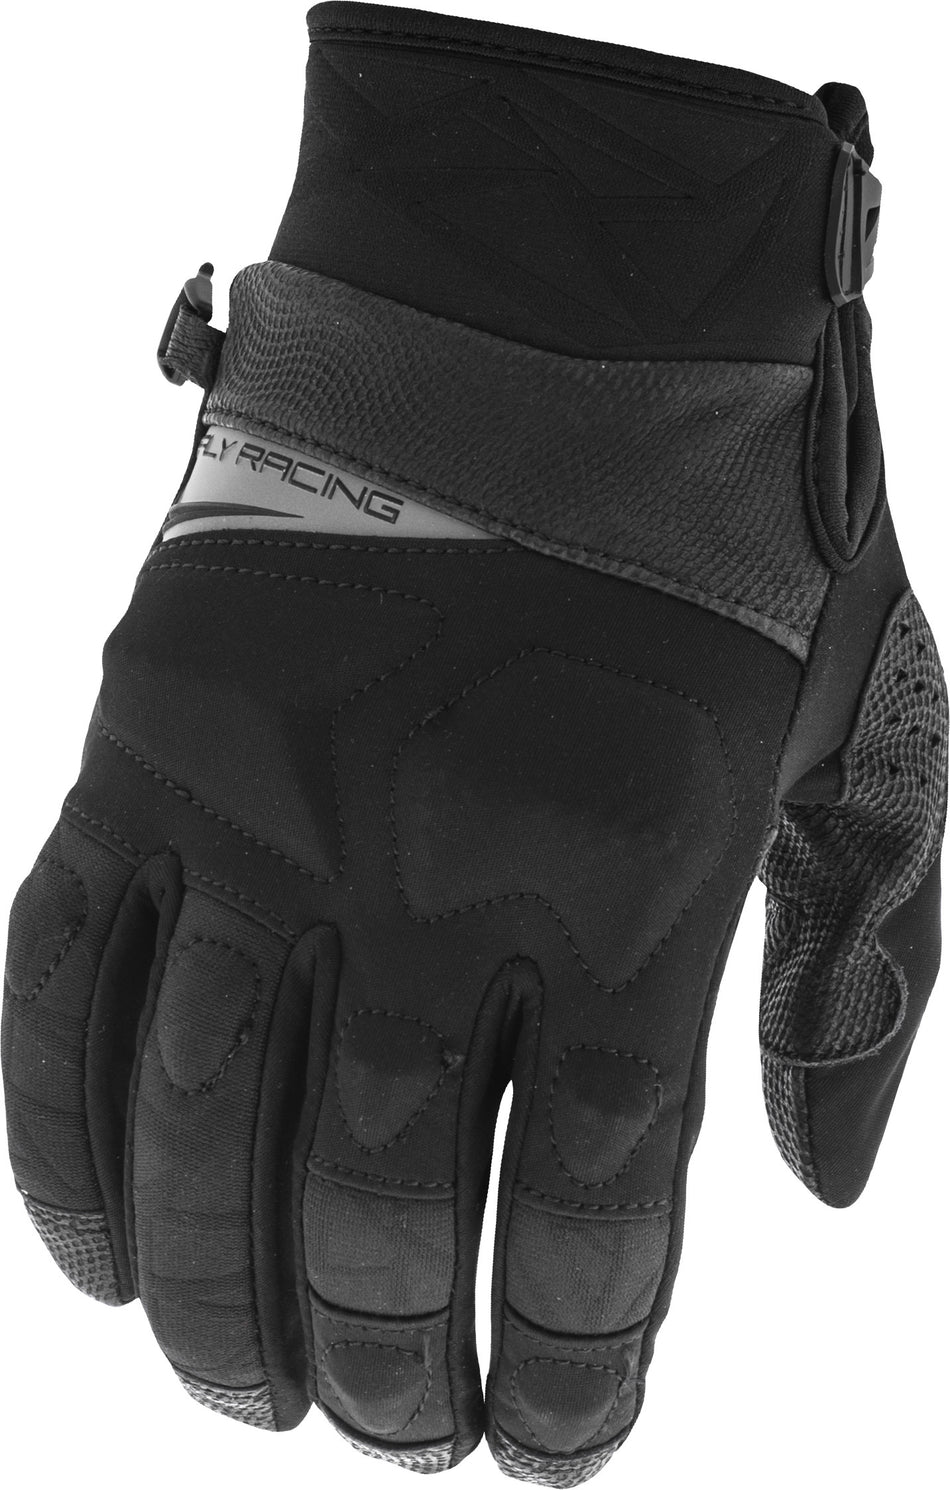 FLY RACING Boundary Gloves Black Sz 12 371-03012